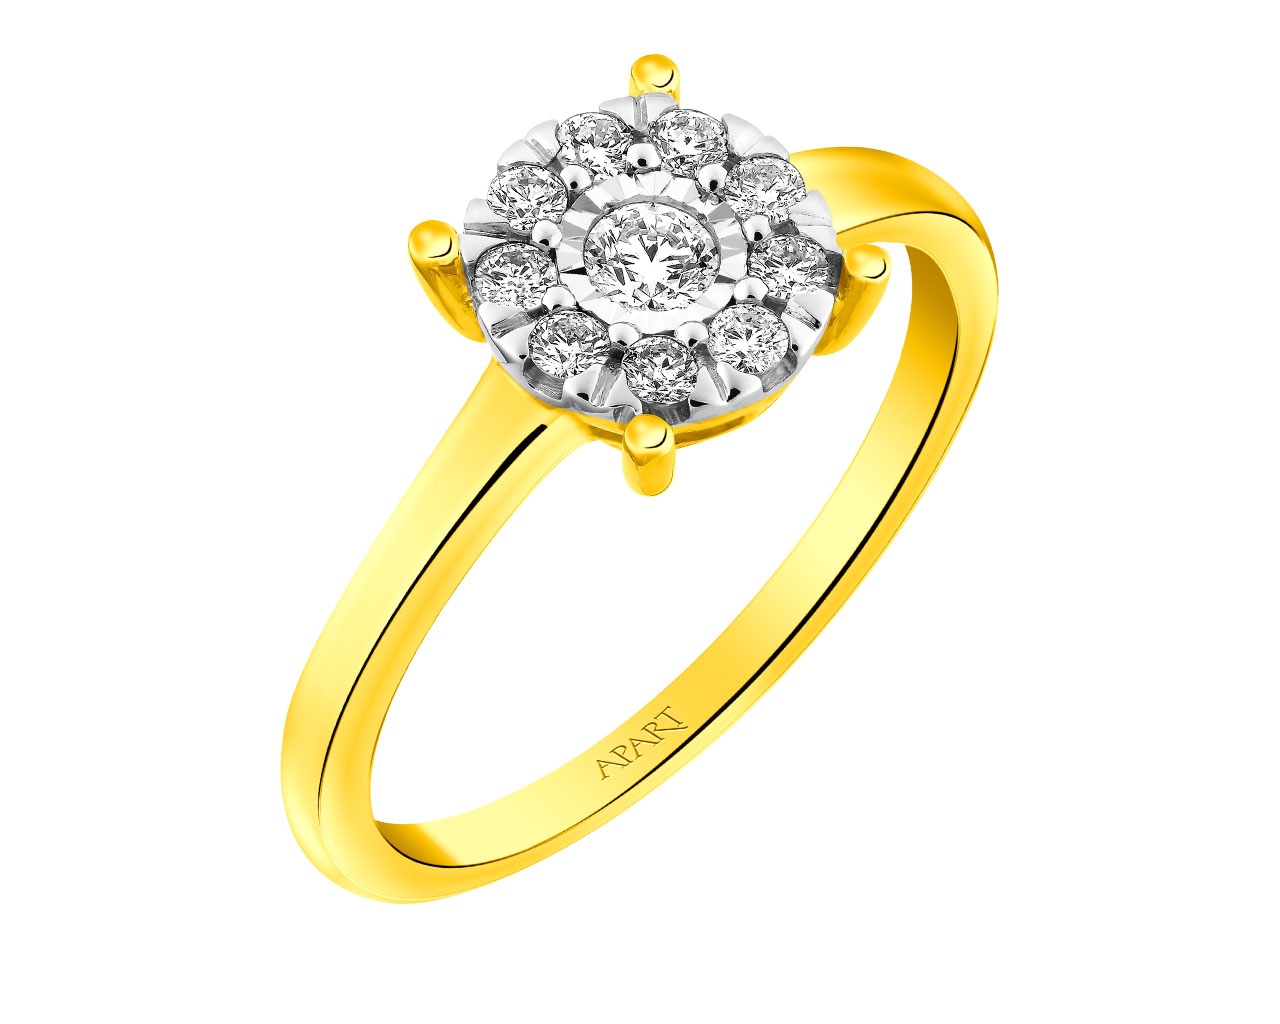 Buy DISHIS 14k (585) Yellow Gold Diamond Ring for Women at Amazon.in